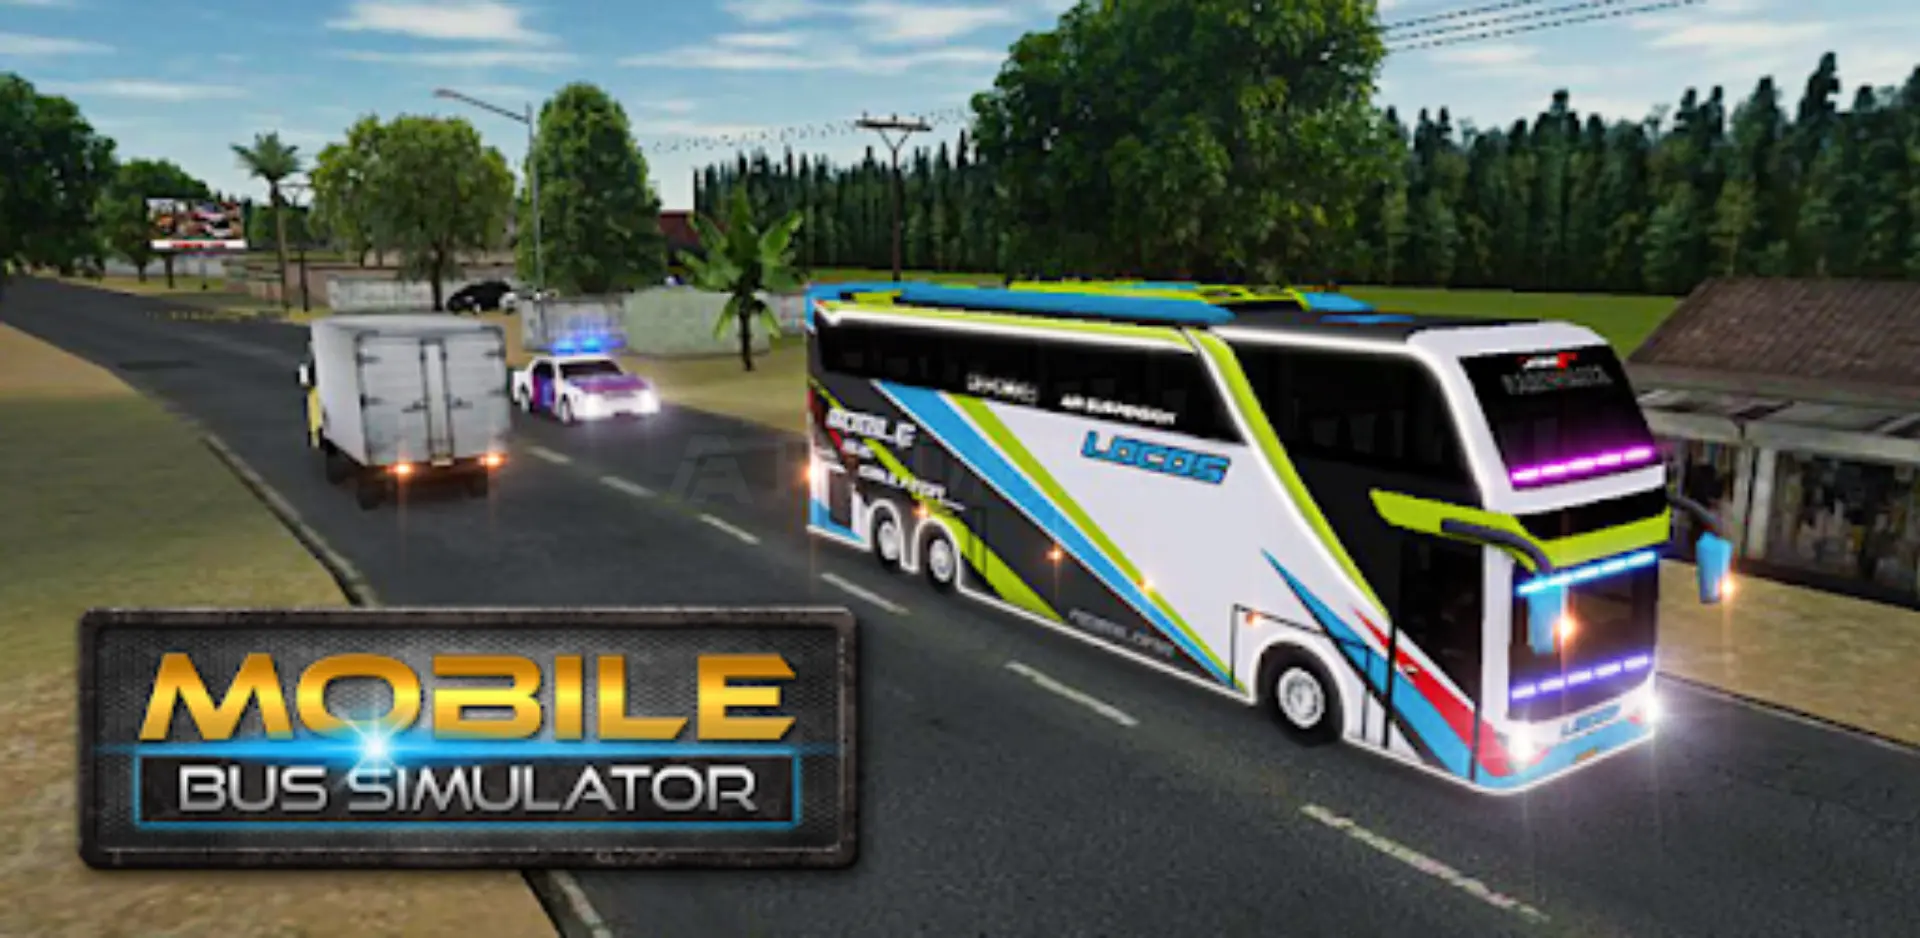 Mobile Bus Simulator feature image